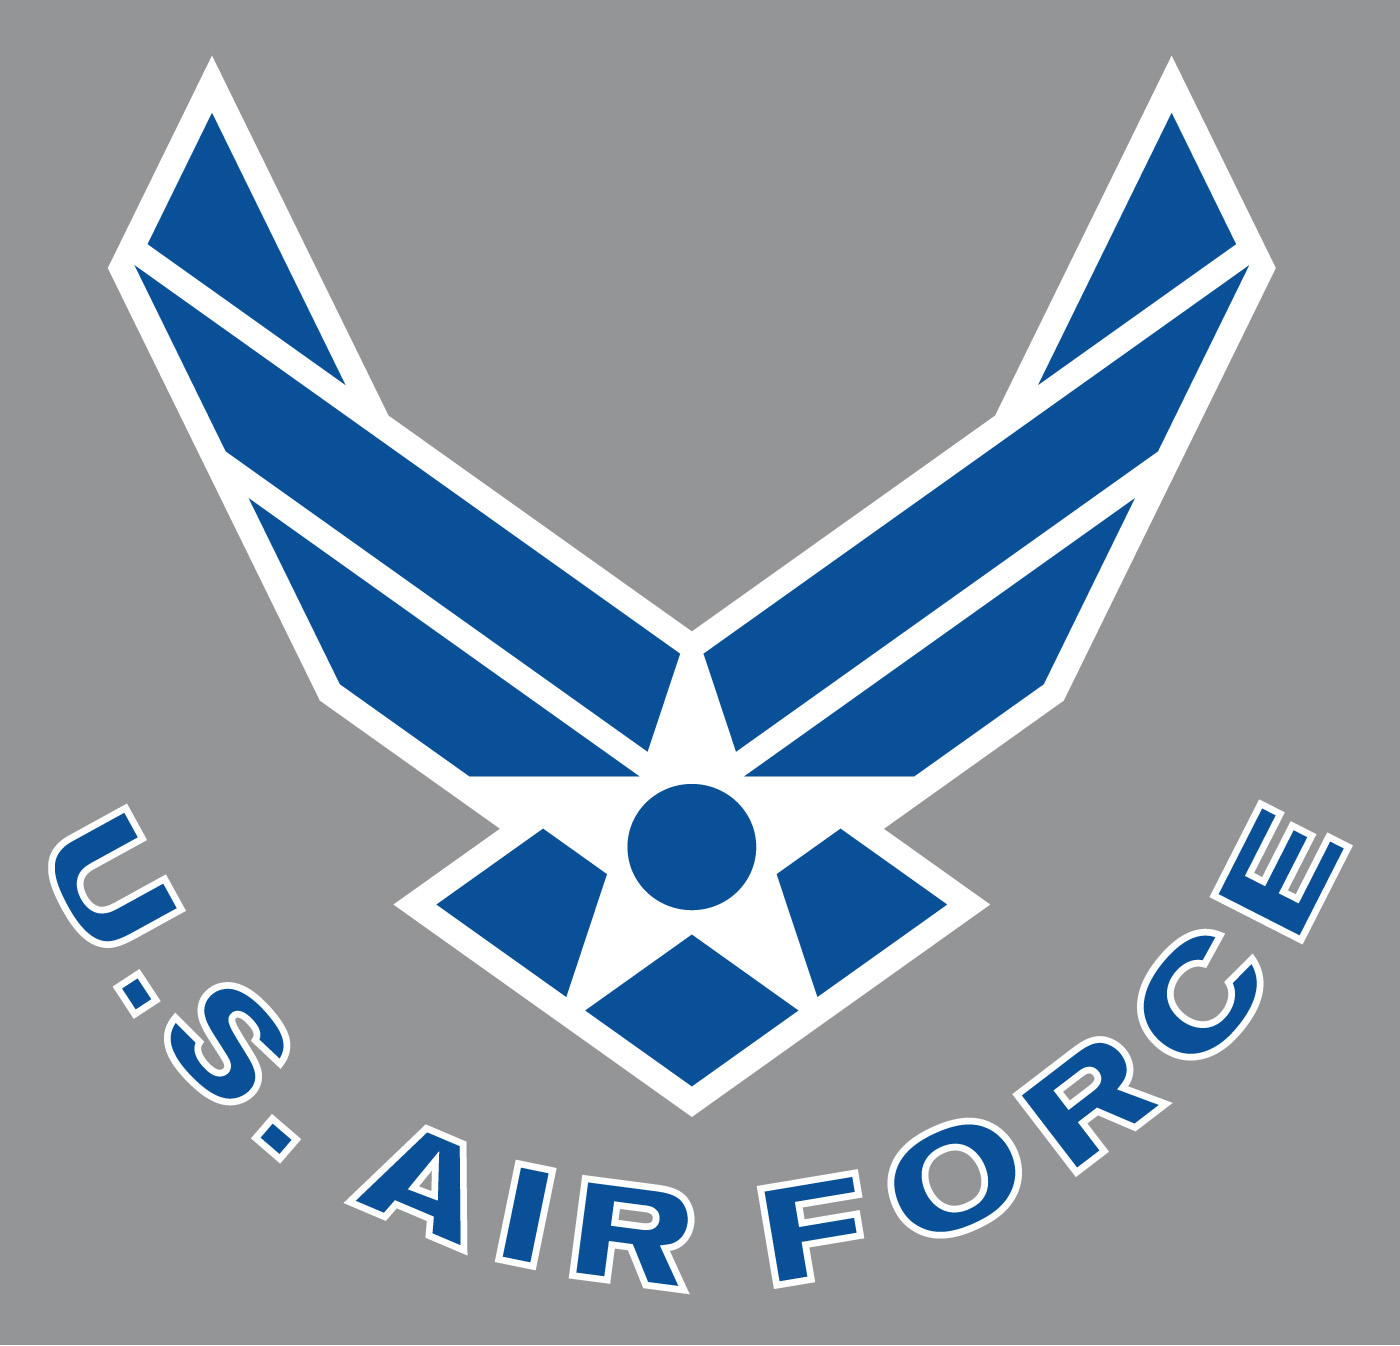 Us Air Force Symbol drawing free image download